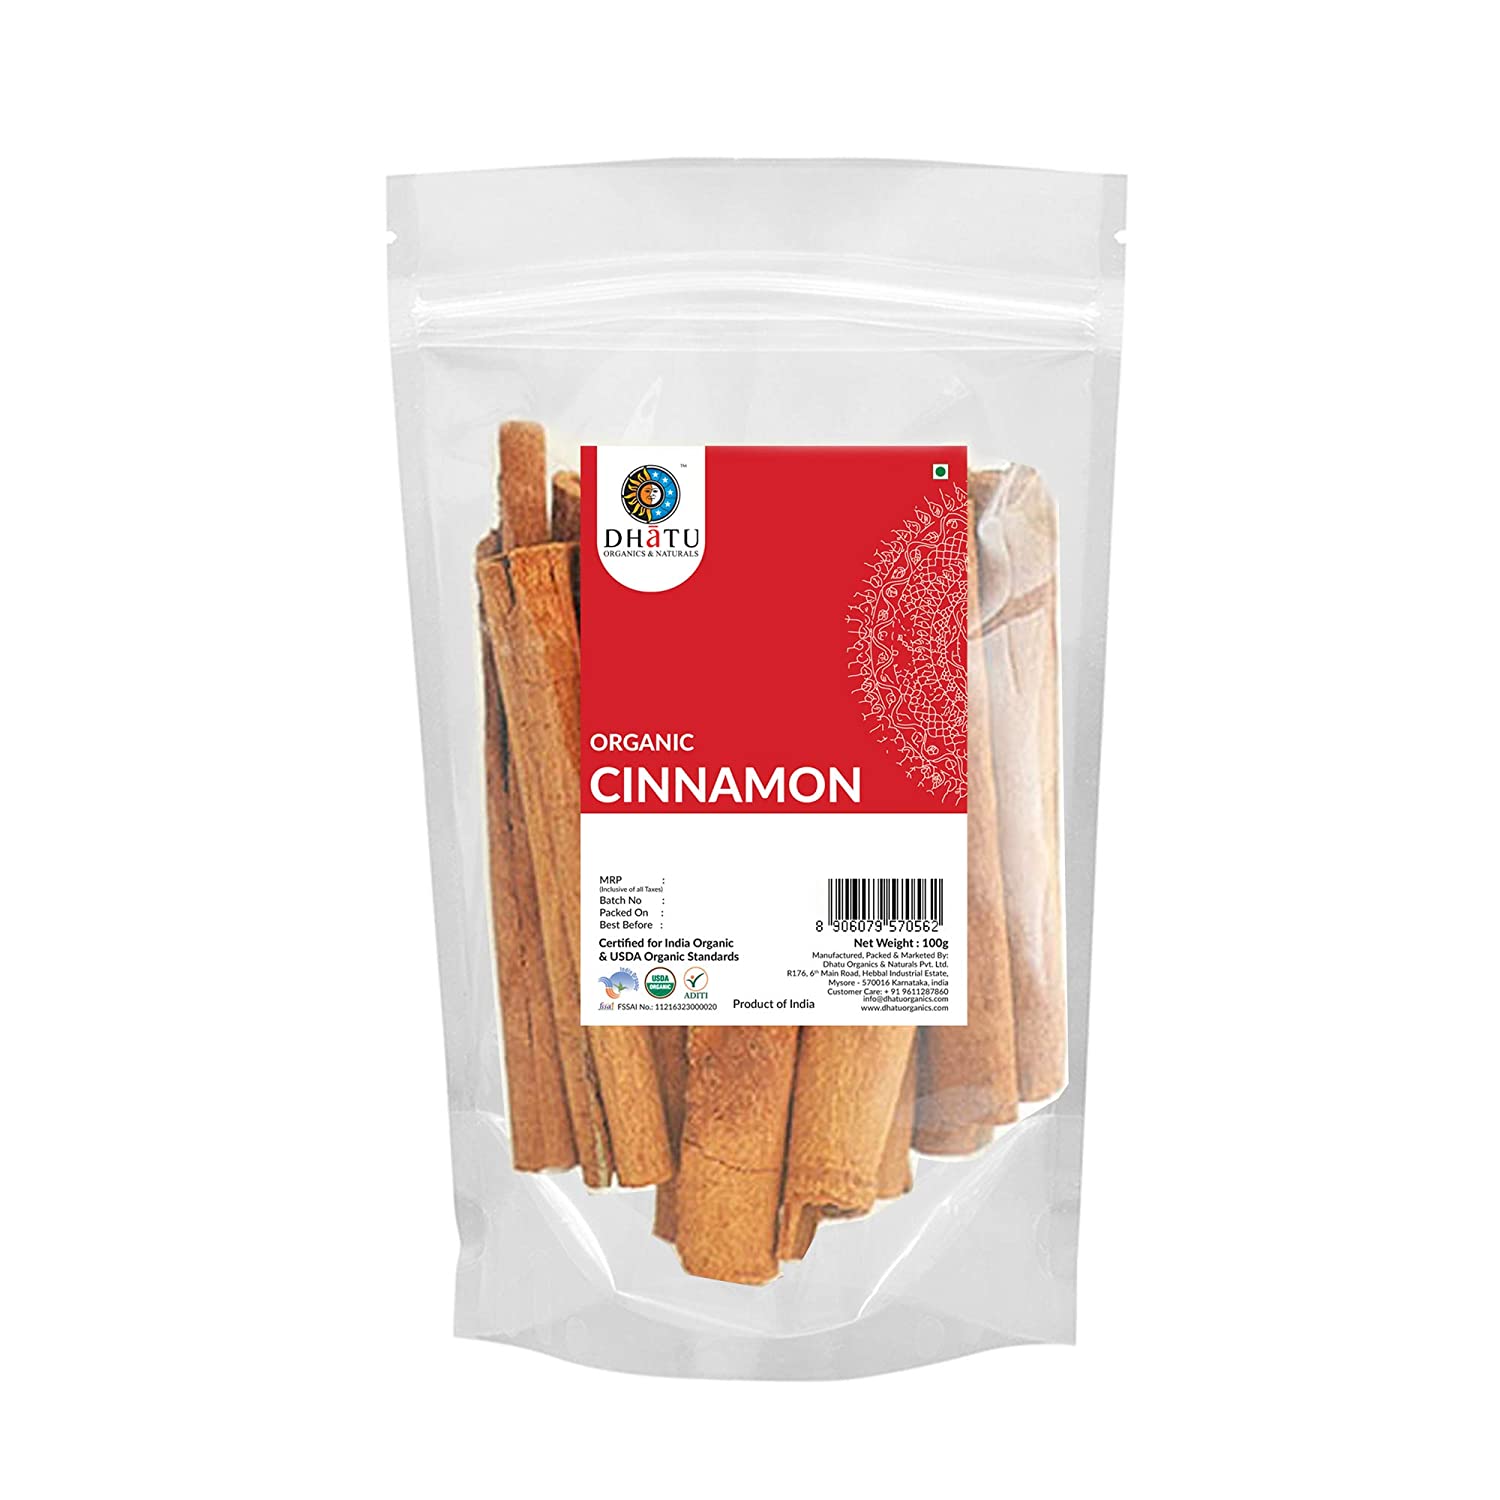 DHATU Organic Cinnamon Sticks, 100g